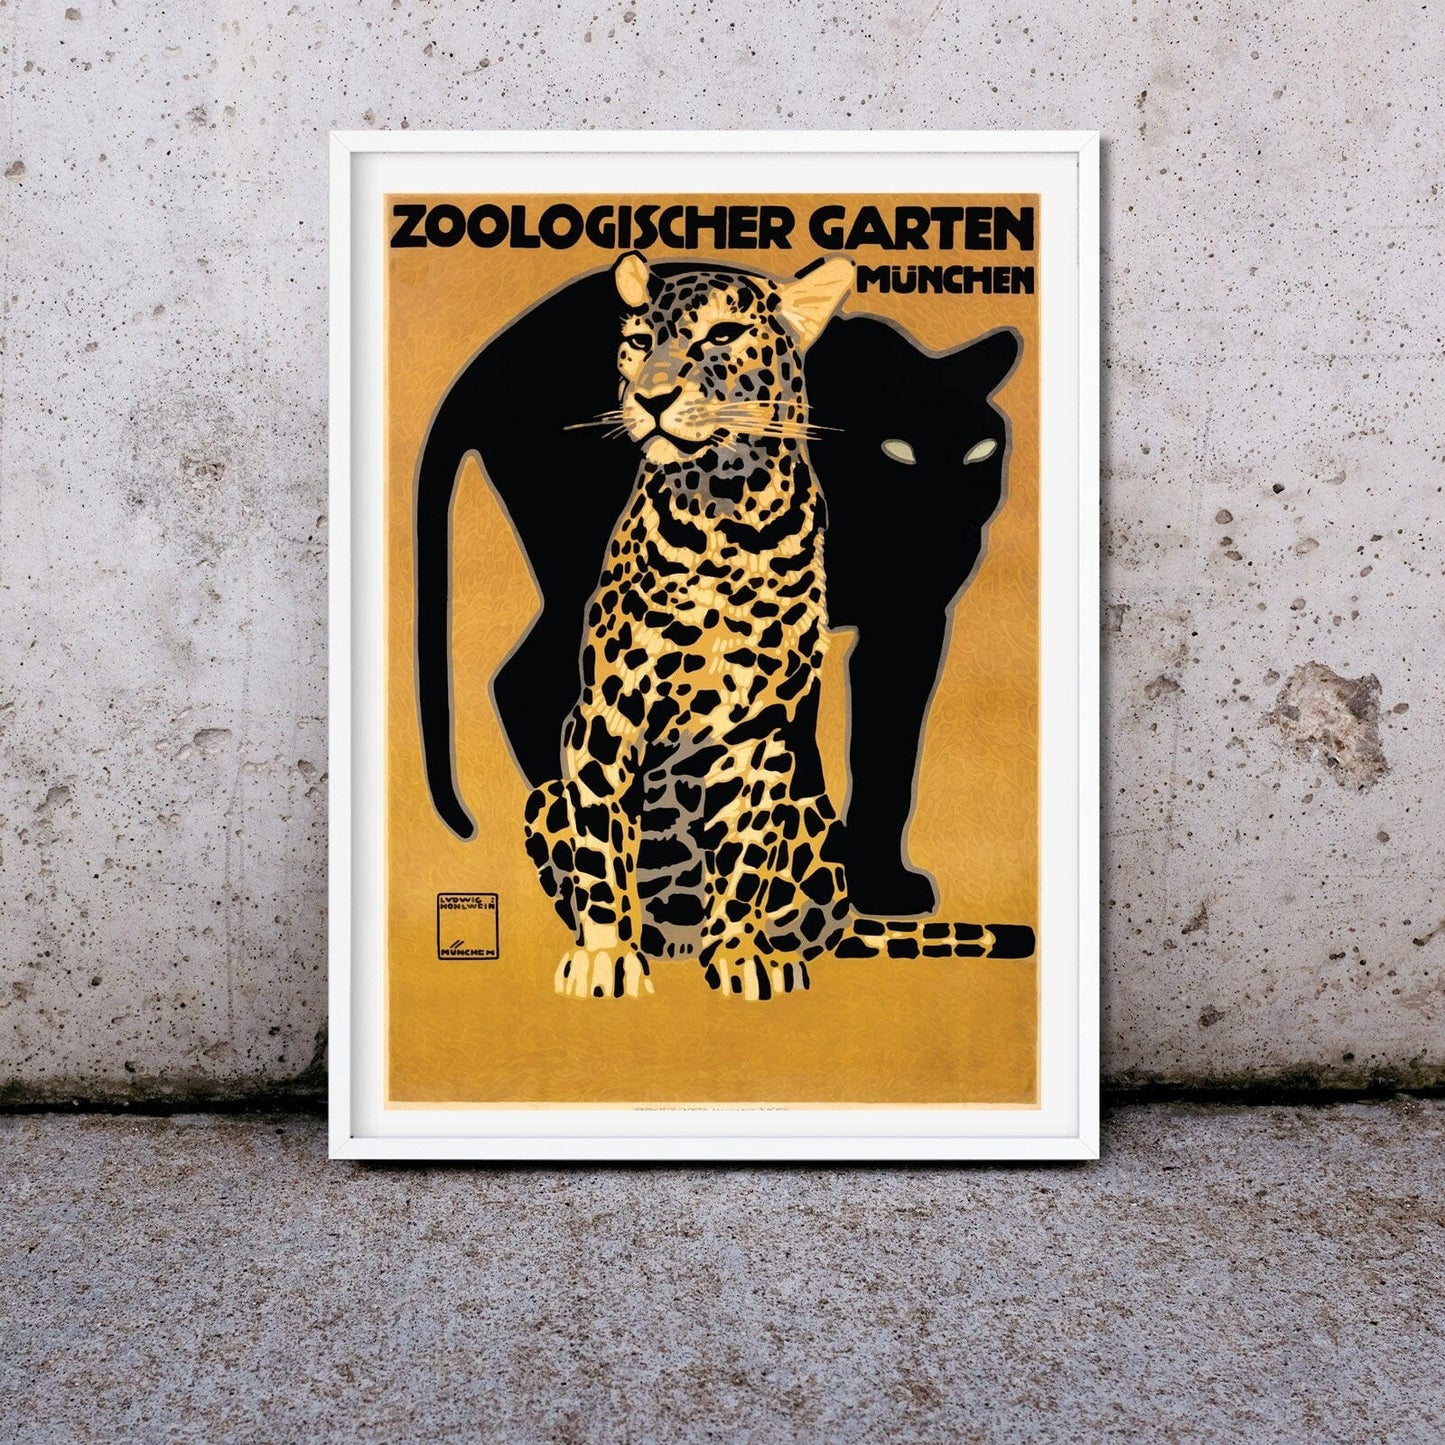 Digital Download vintage advertising zoo poster leopard prints download